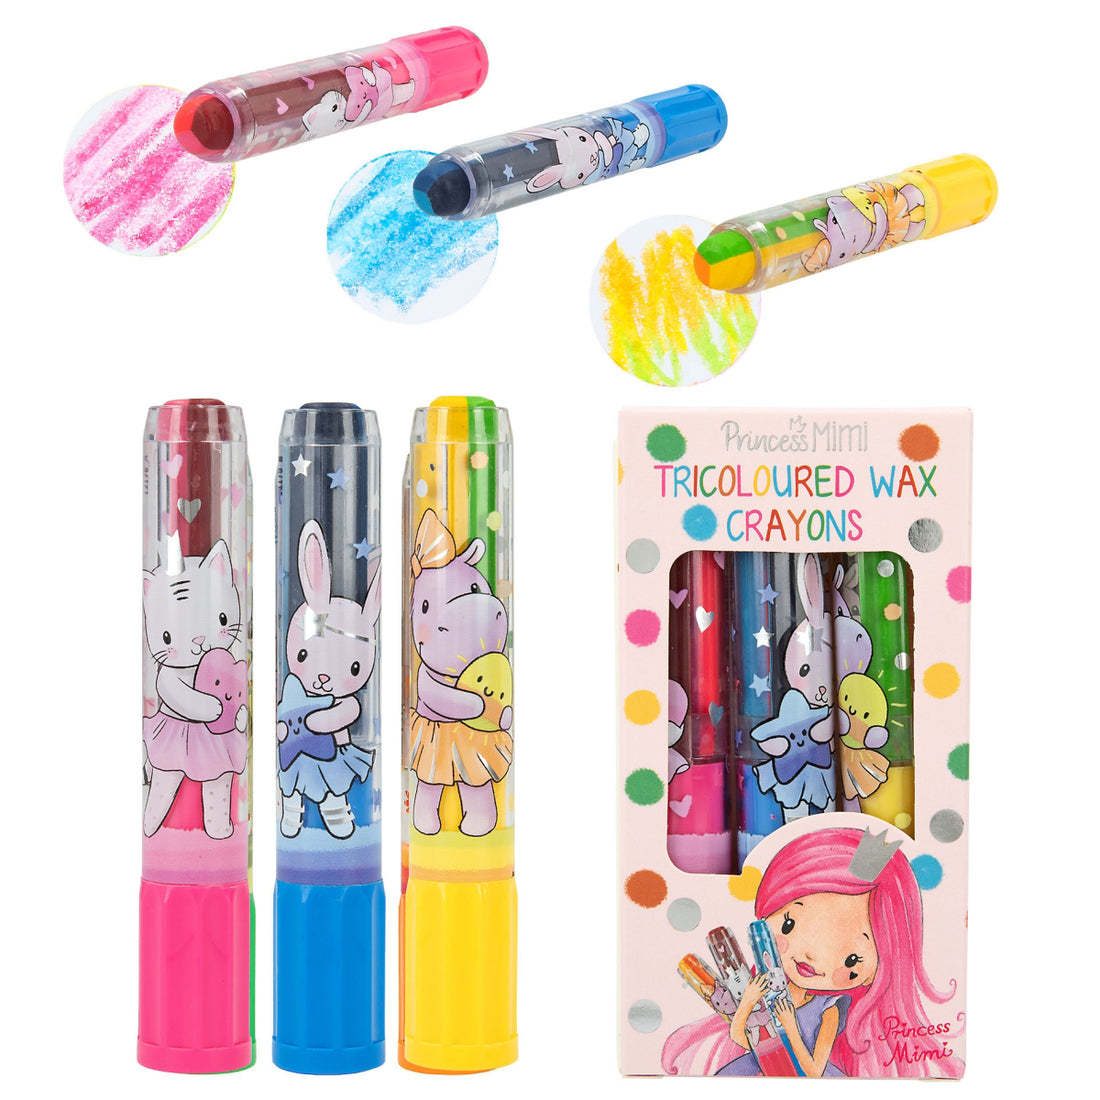 depesche-princess-mimi-tricoloured-wax-crayon-set-depe-0012176